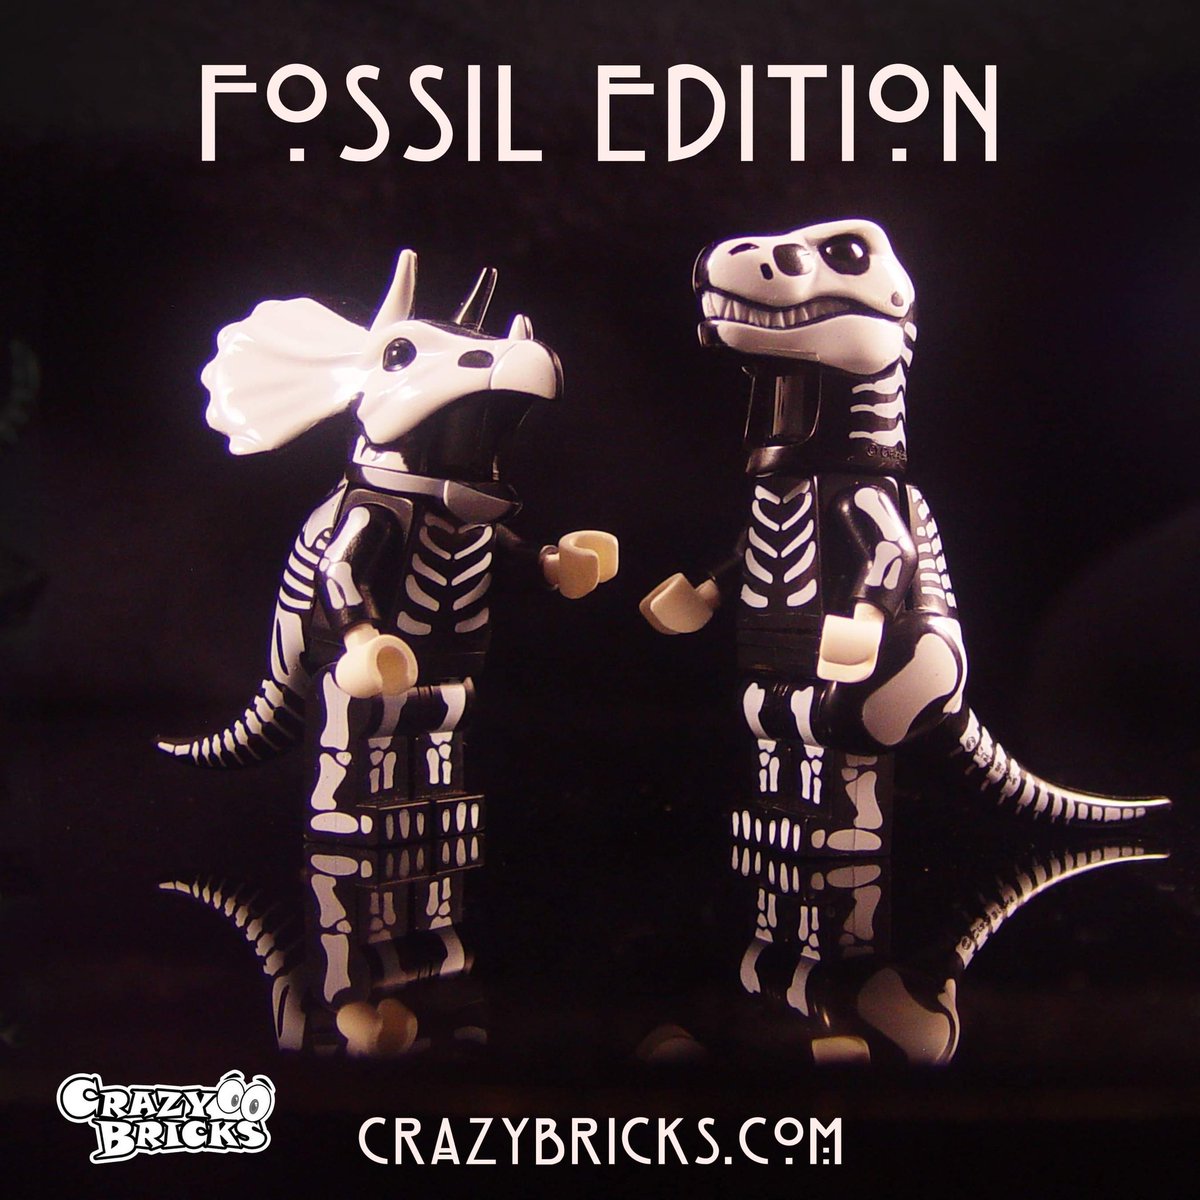 Fossil Edition DinoDudes! 
#dinodudes #crazybricks #afolcommunity #kickstarter #dinosaursofinstagram #dinosaur #kickstarter #afol #tfol #triceratops #minifig #minifigures #lego #fossils